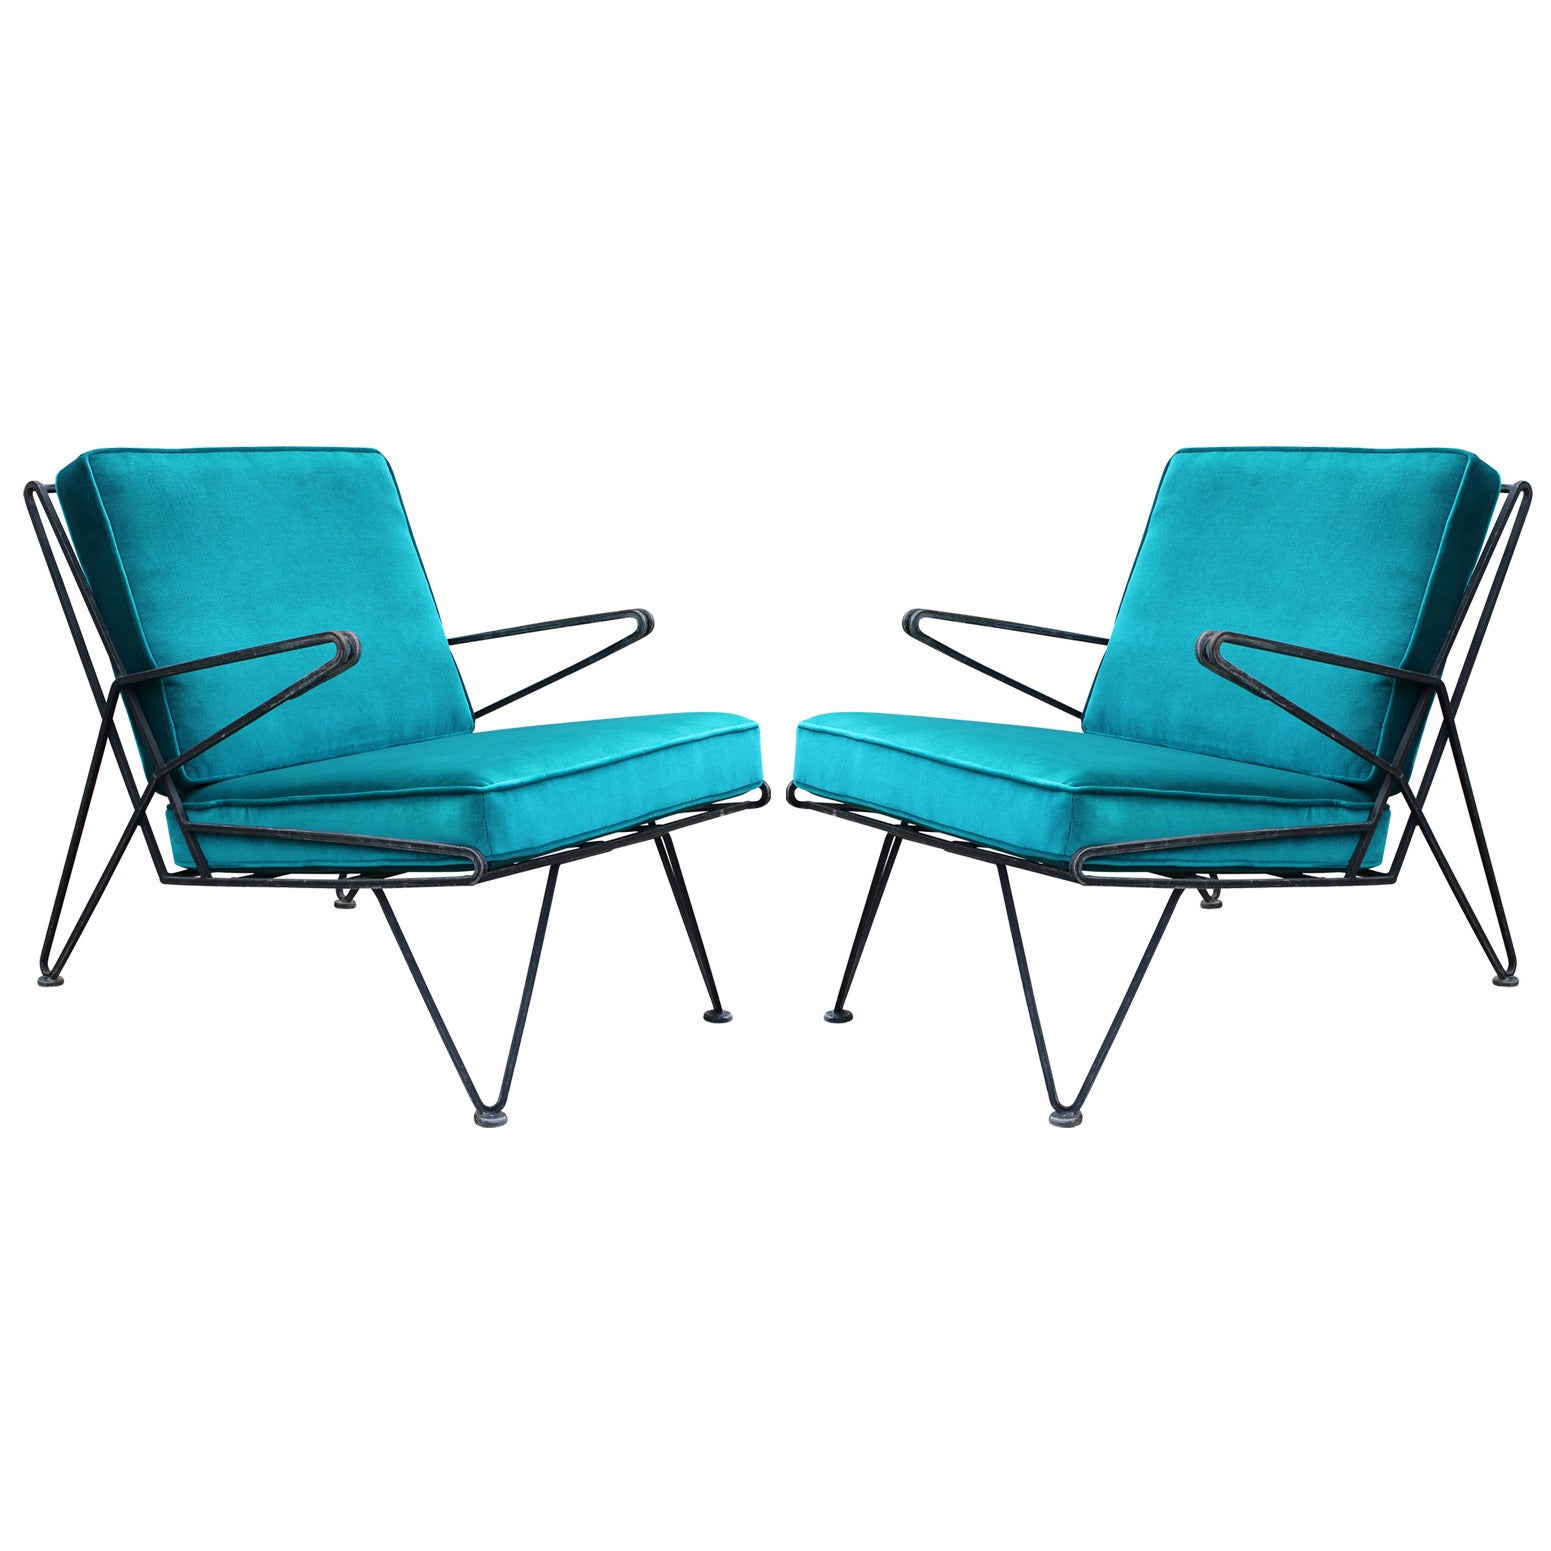 Phenomenal Pair of Teal Velvet Italian Style Mid-Century Modern Lounge Chairs